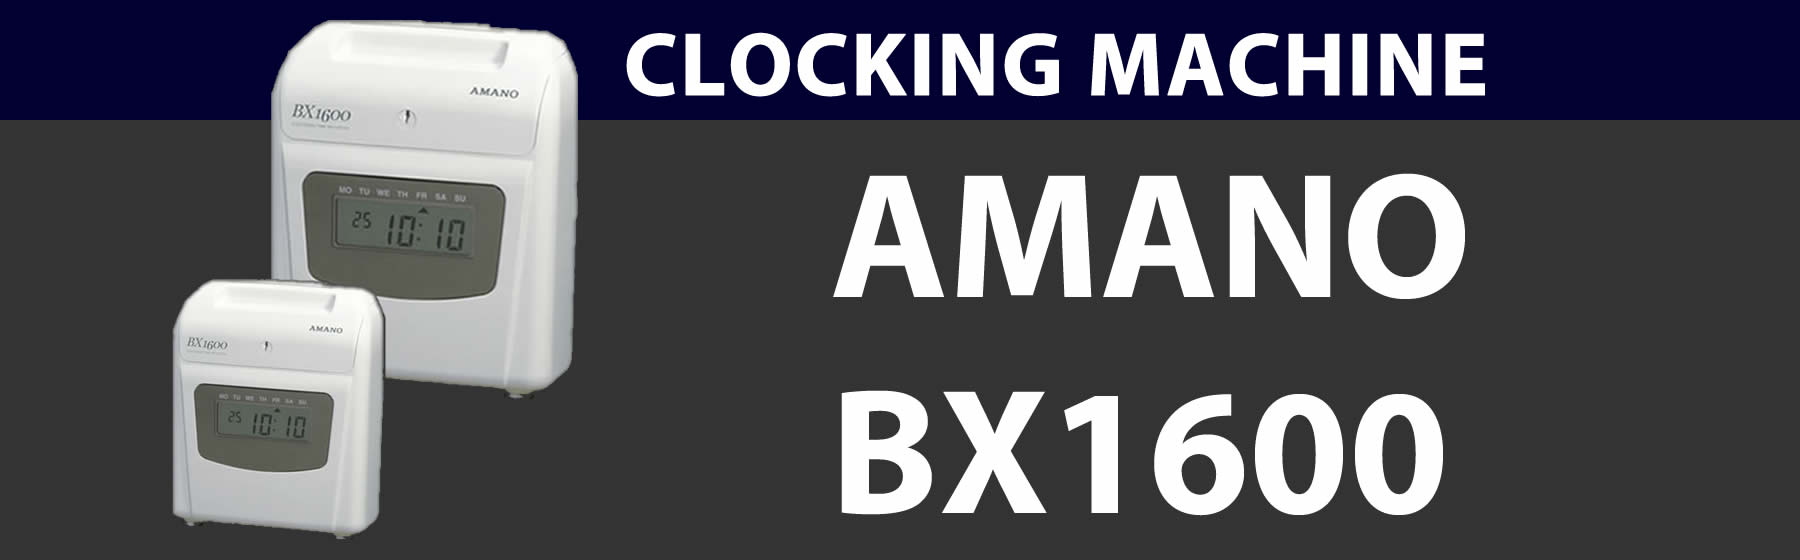 clocking machine AMANO BX 1600 Banner